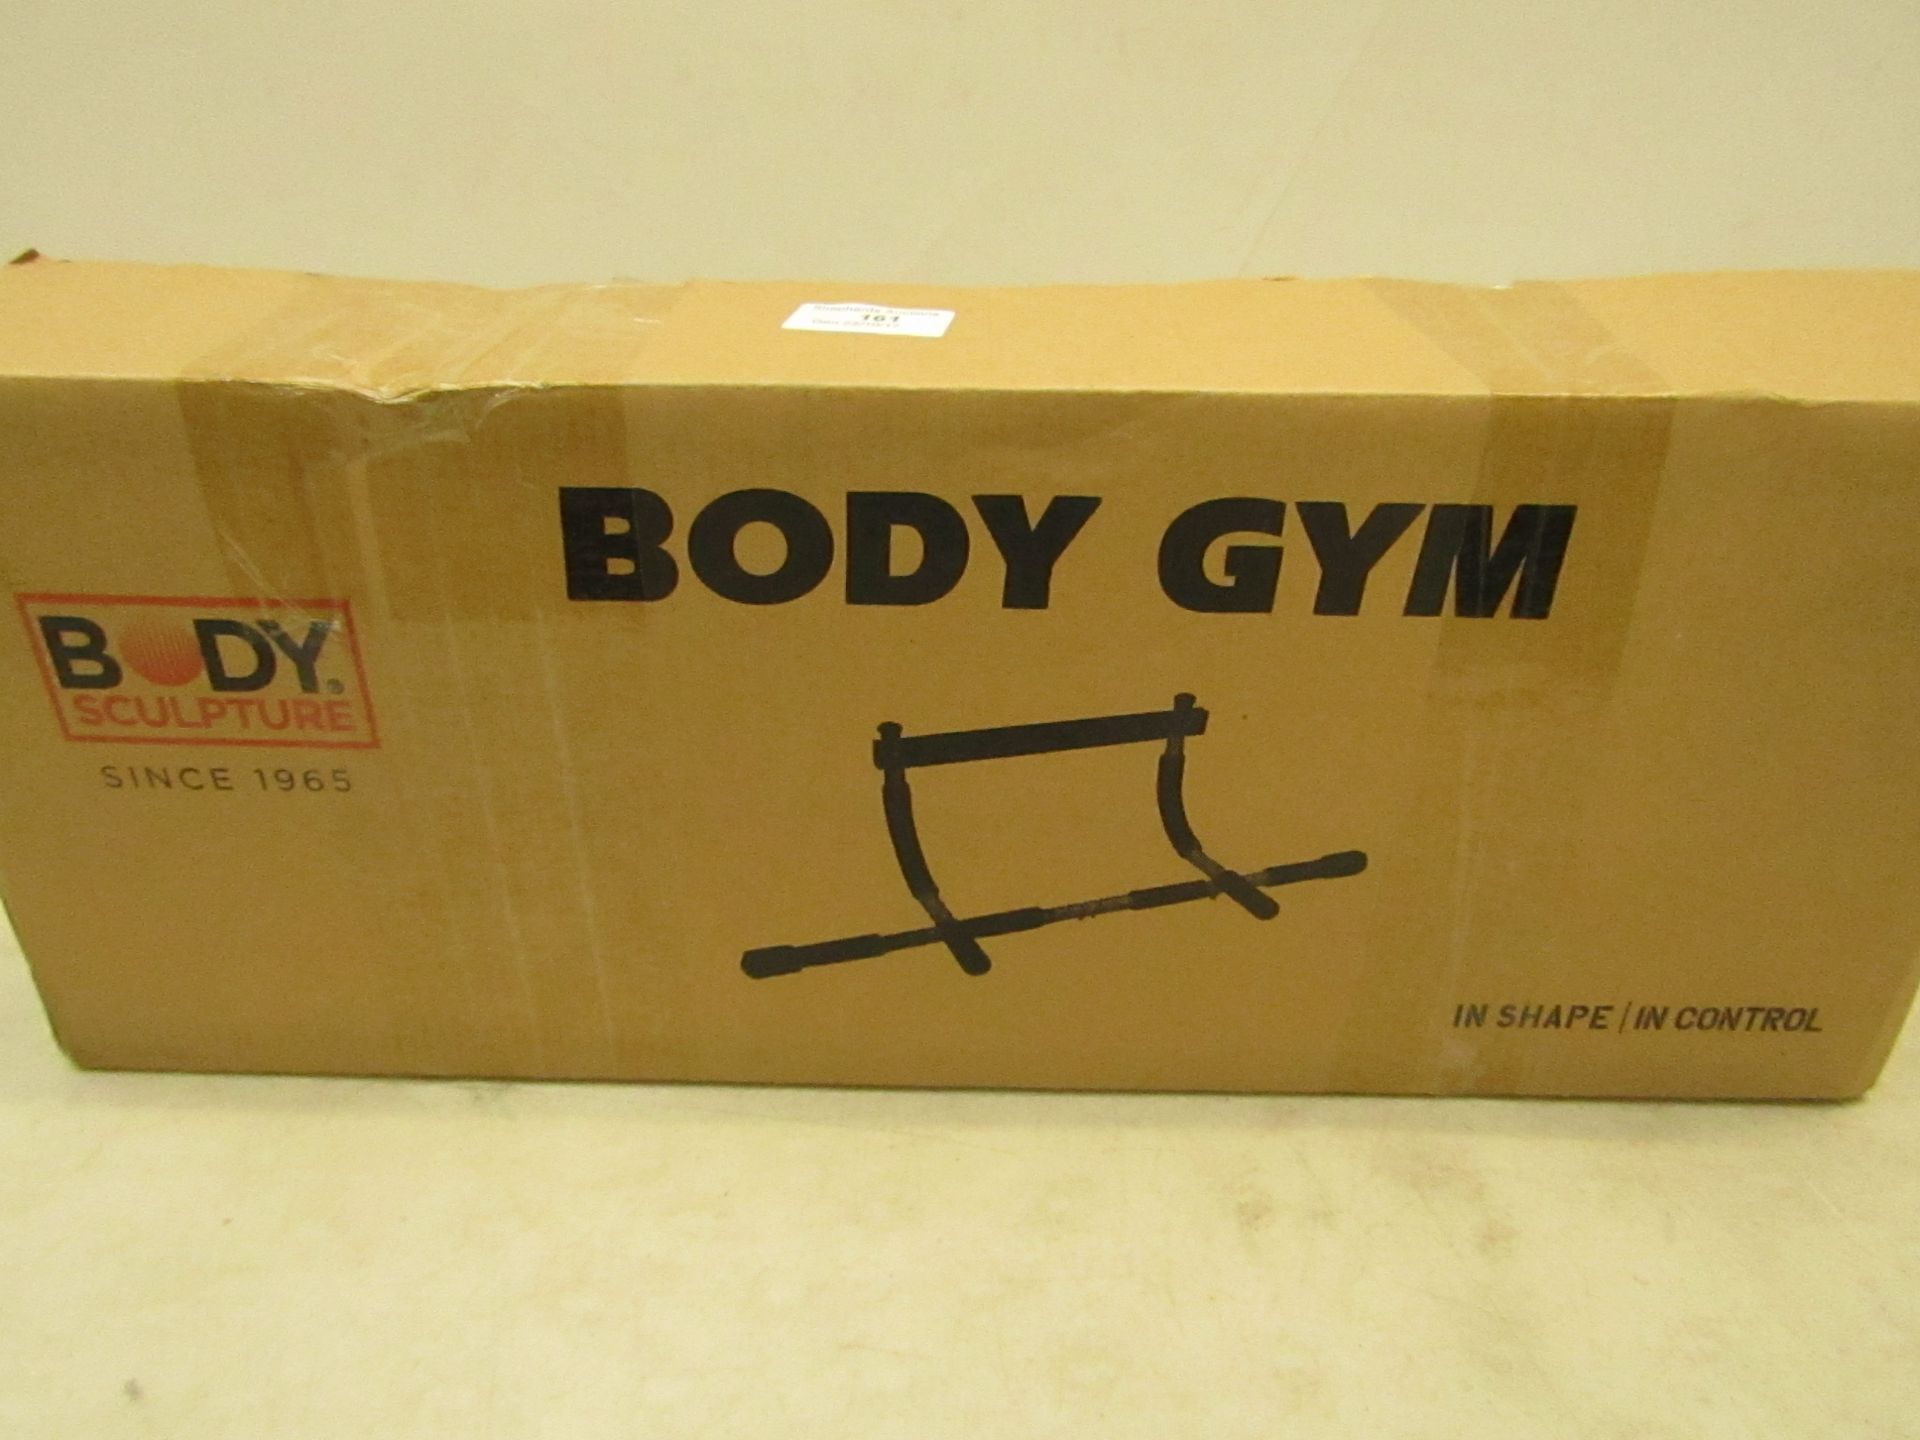 Body Gym upper body workout bar, boxed.